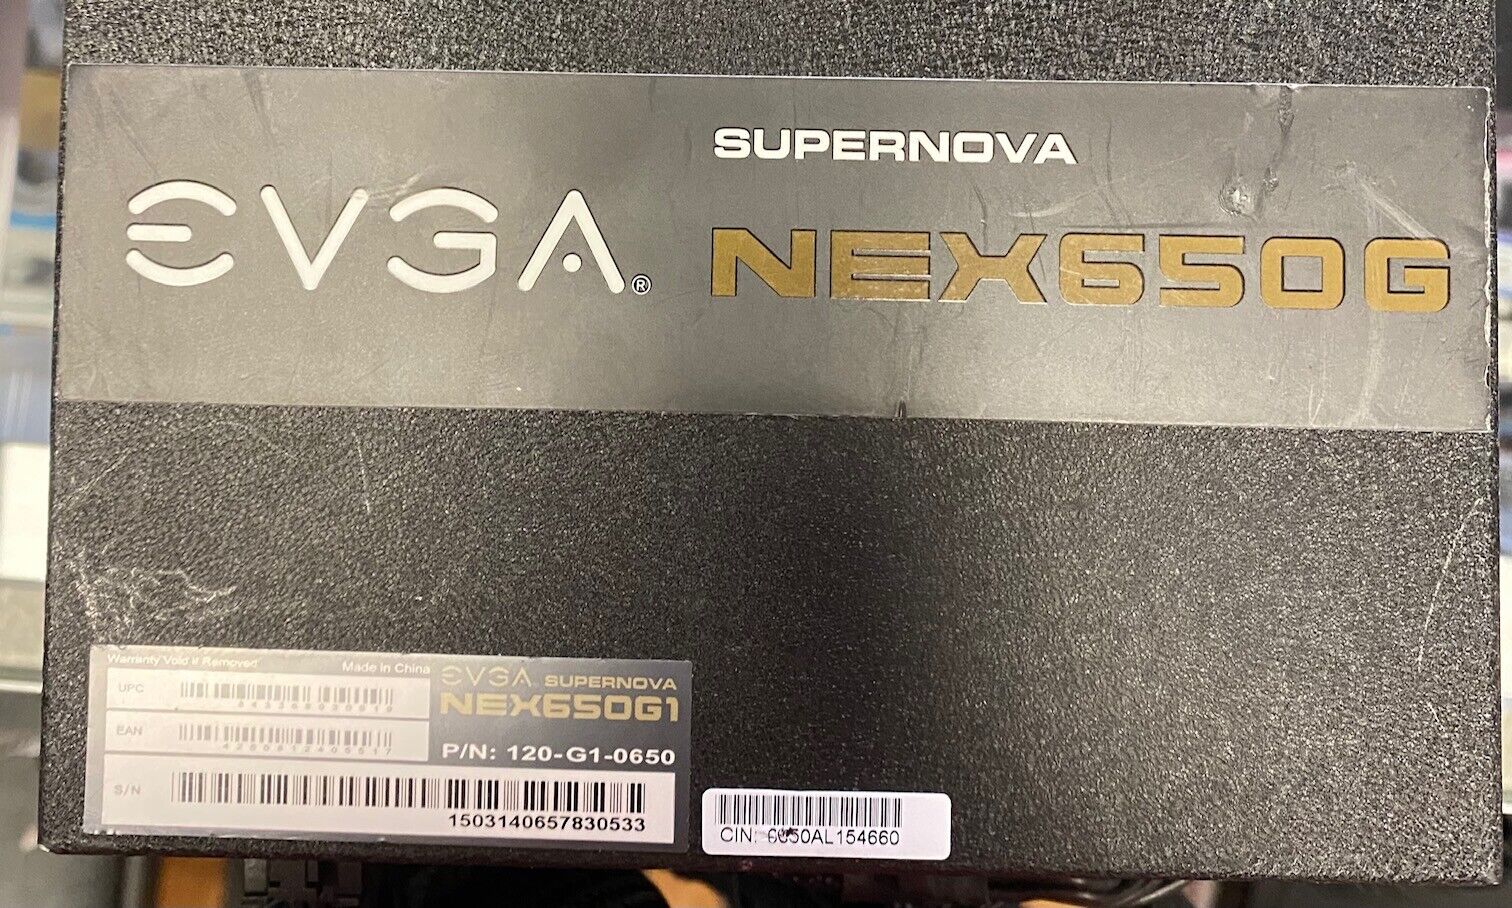 Evga SuperNova NEX650G 650W Modular ATX Desktop Power Supply 120-G1-0650